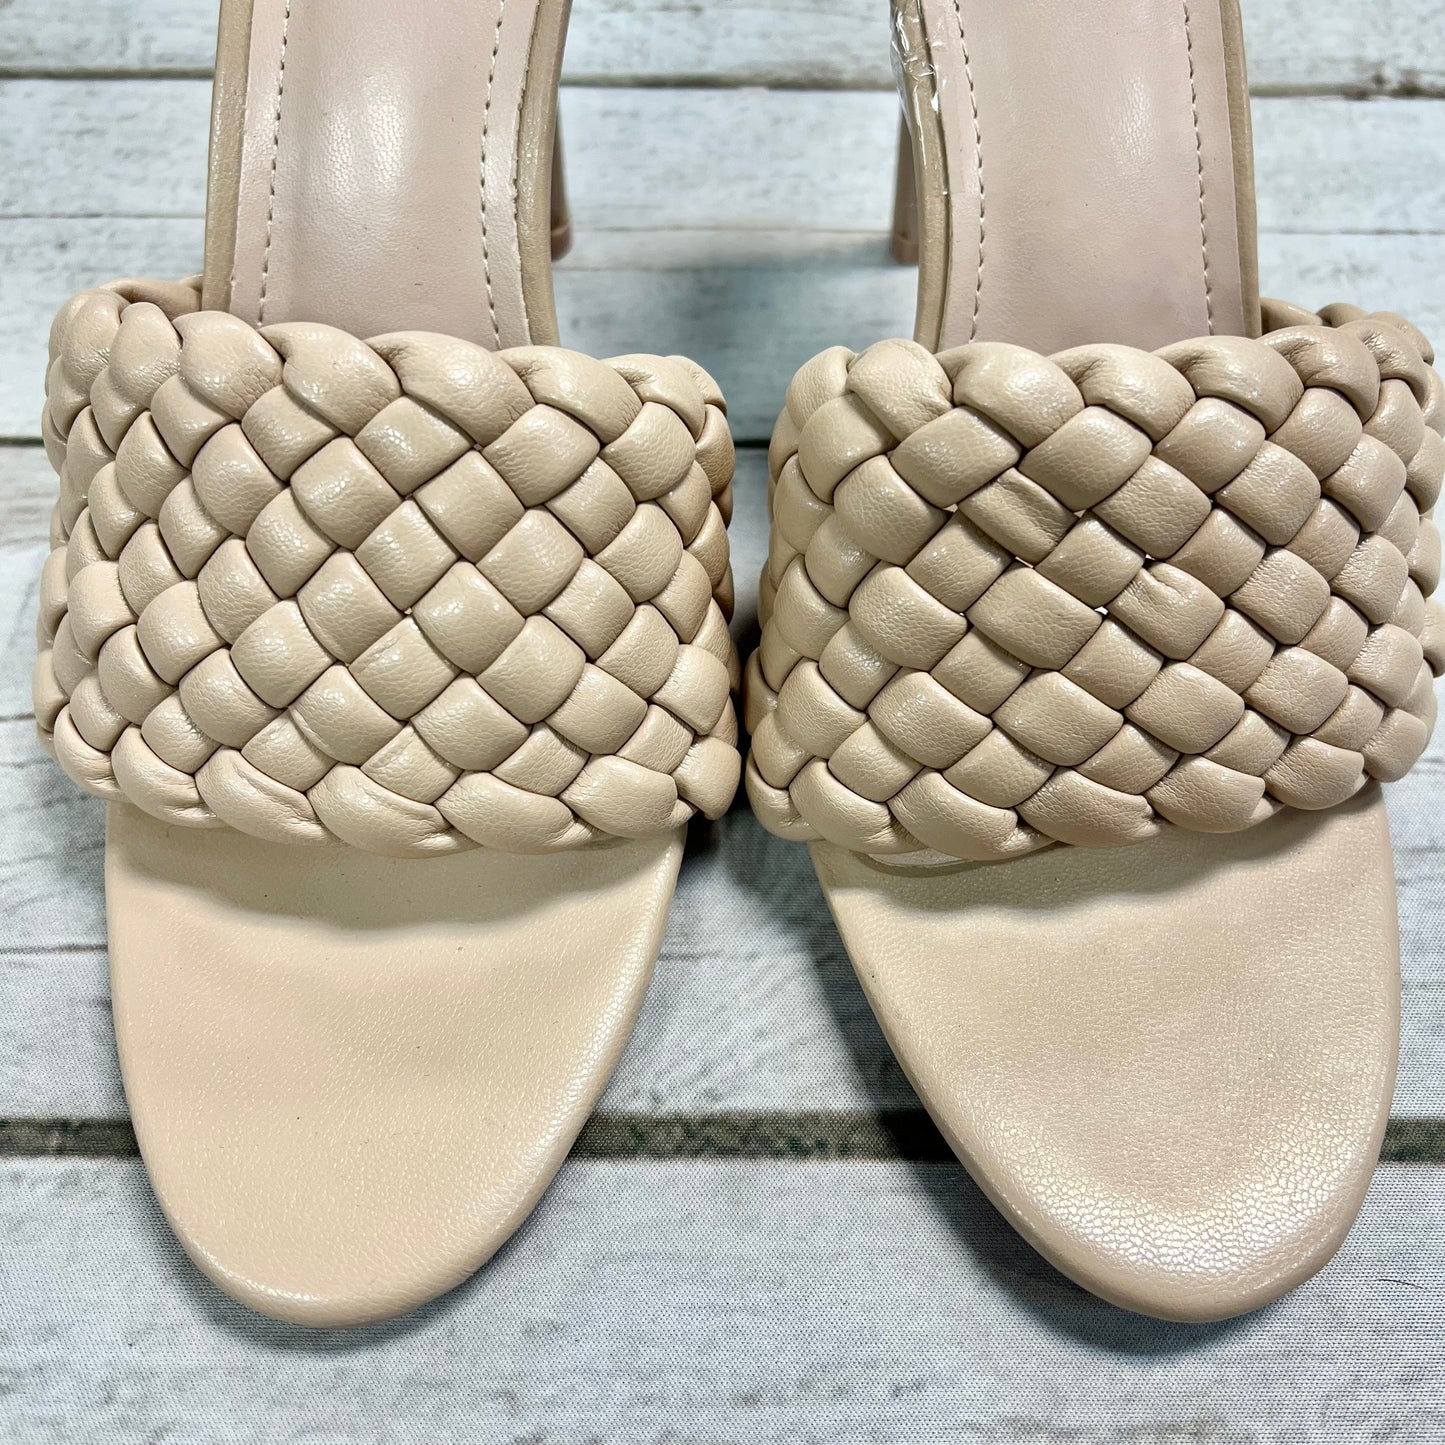 Sandals Heels Stiletto By Cape Robbin  Size: 9